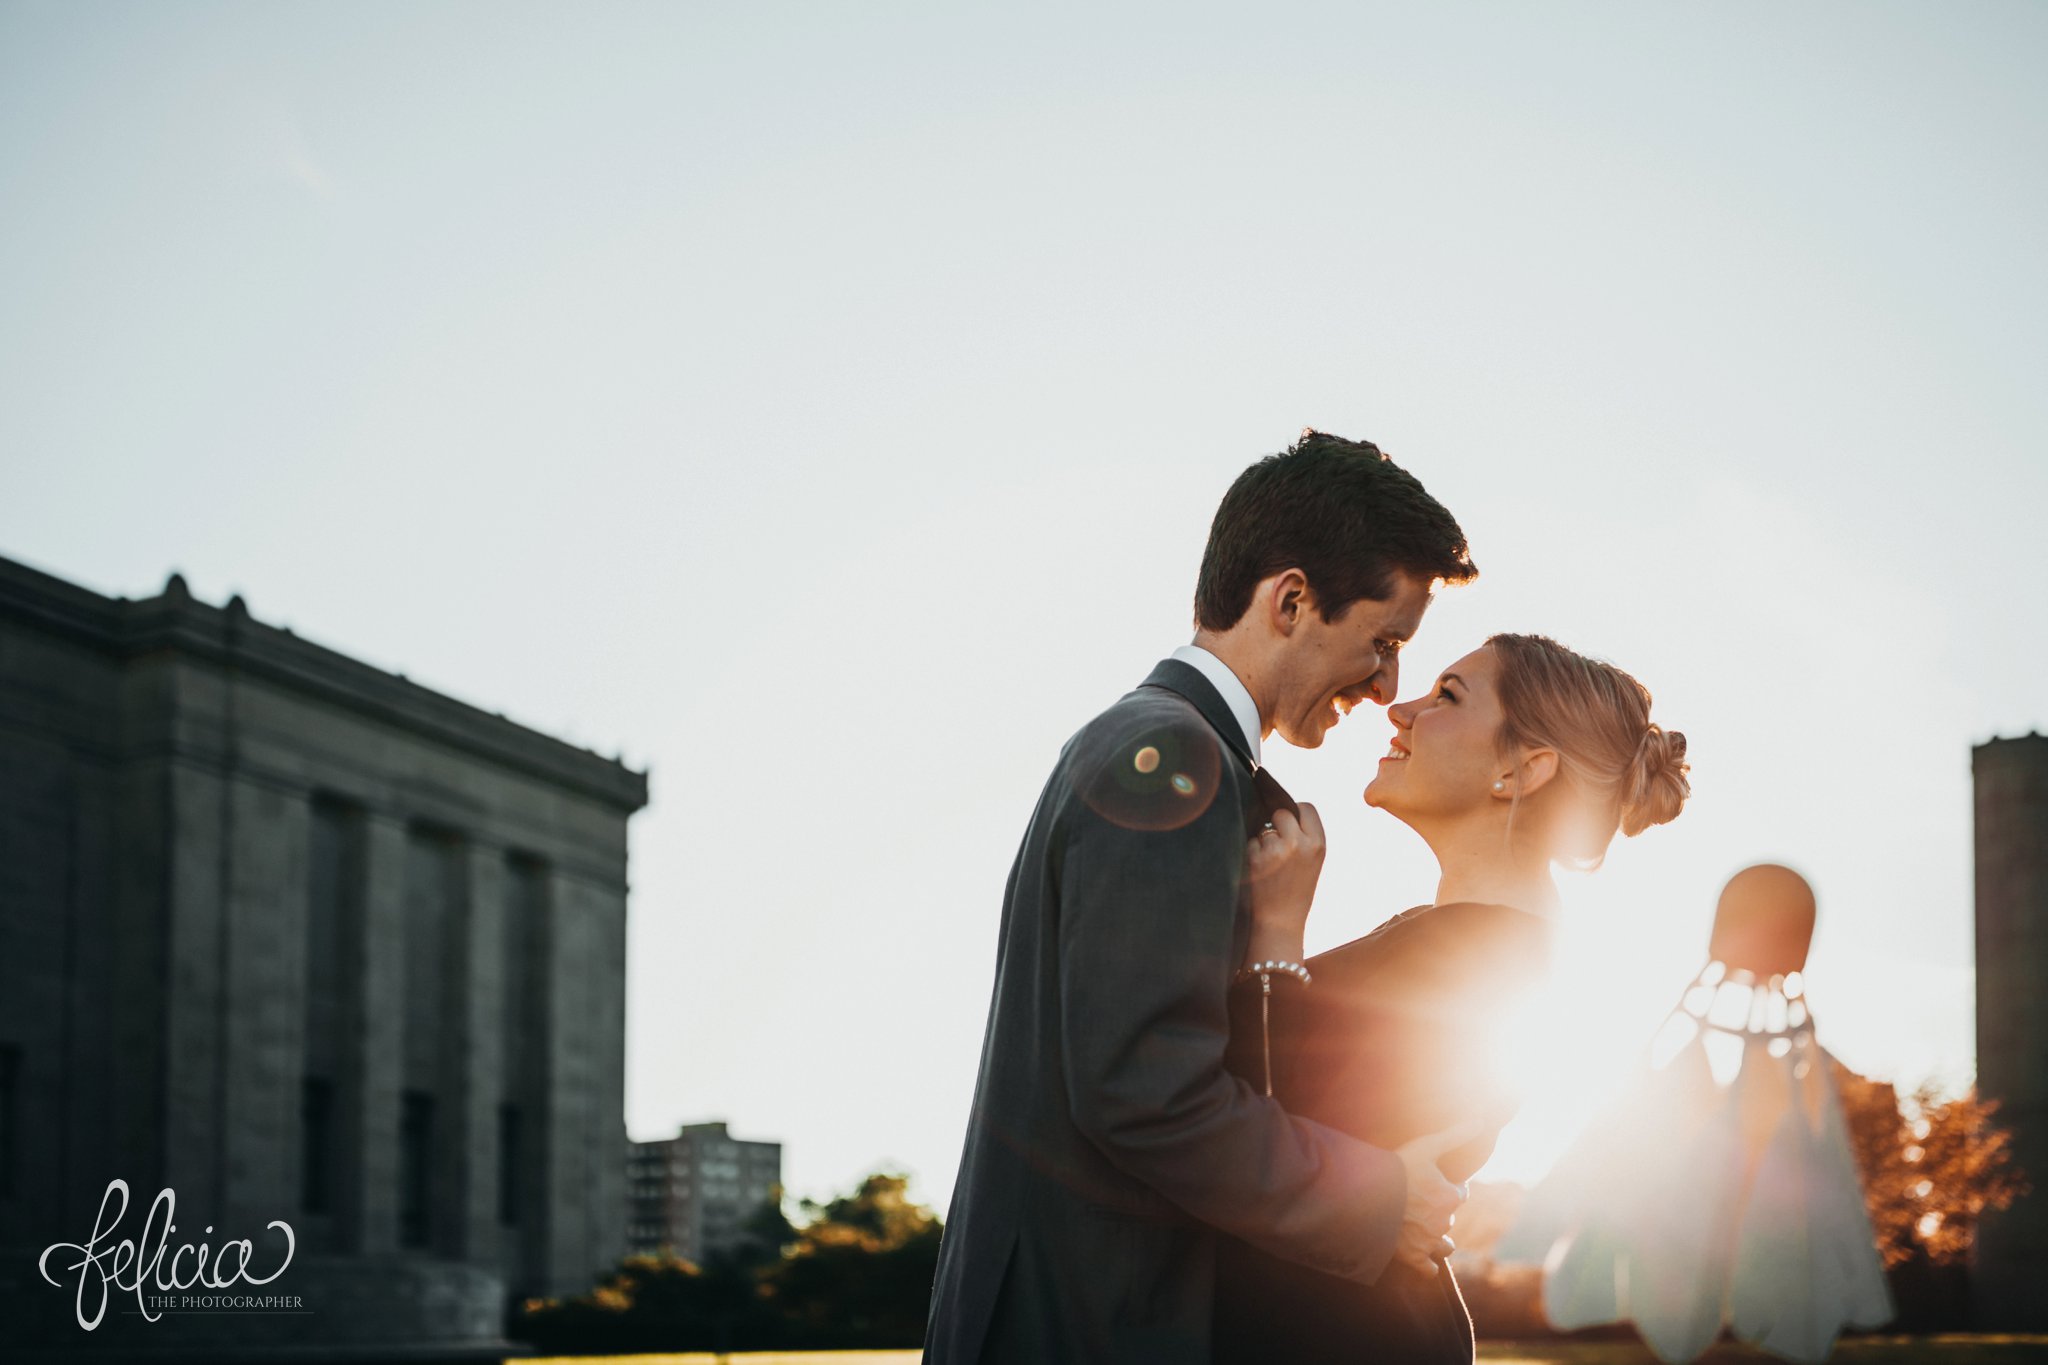 images by feliciathephotographer.com | wedding photographer | kansas city missouri | engagement | sunset | true love | romantic | golden hour | nelson Atkins | classy | elegant 